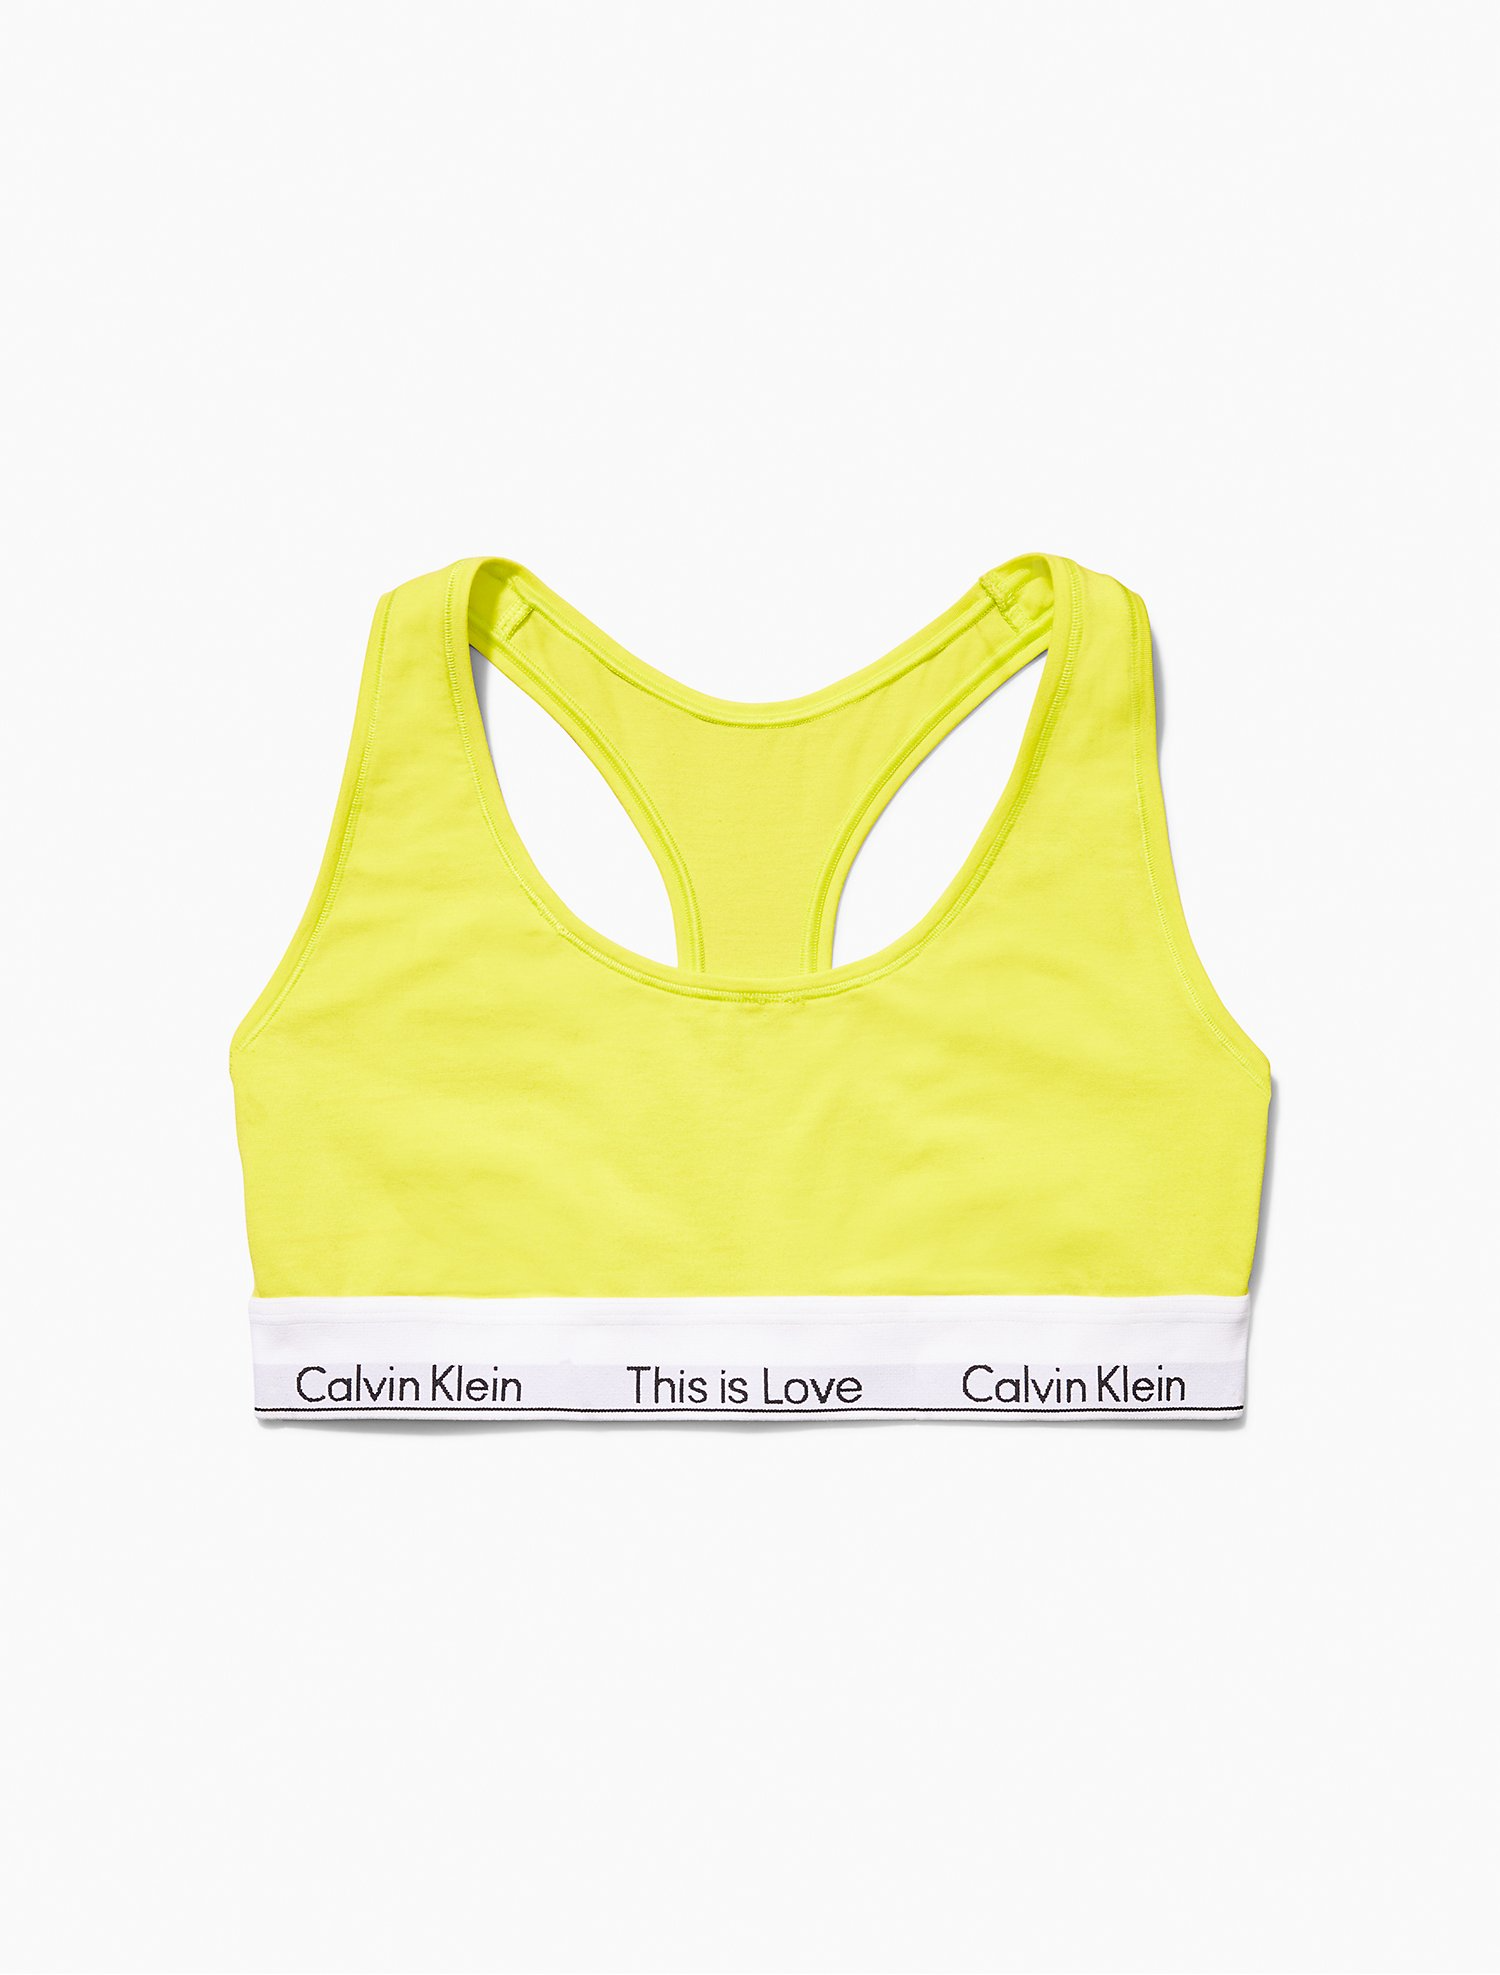 Bras - Calvin Klein This Is Love Colorblock Unlined Bralette